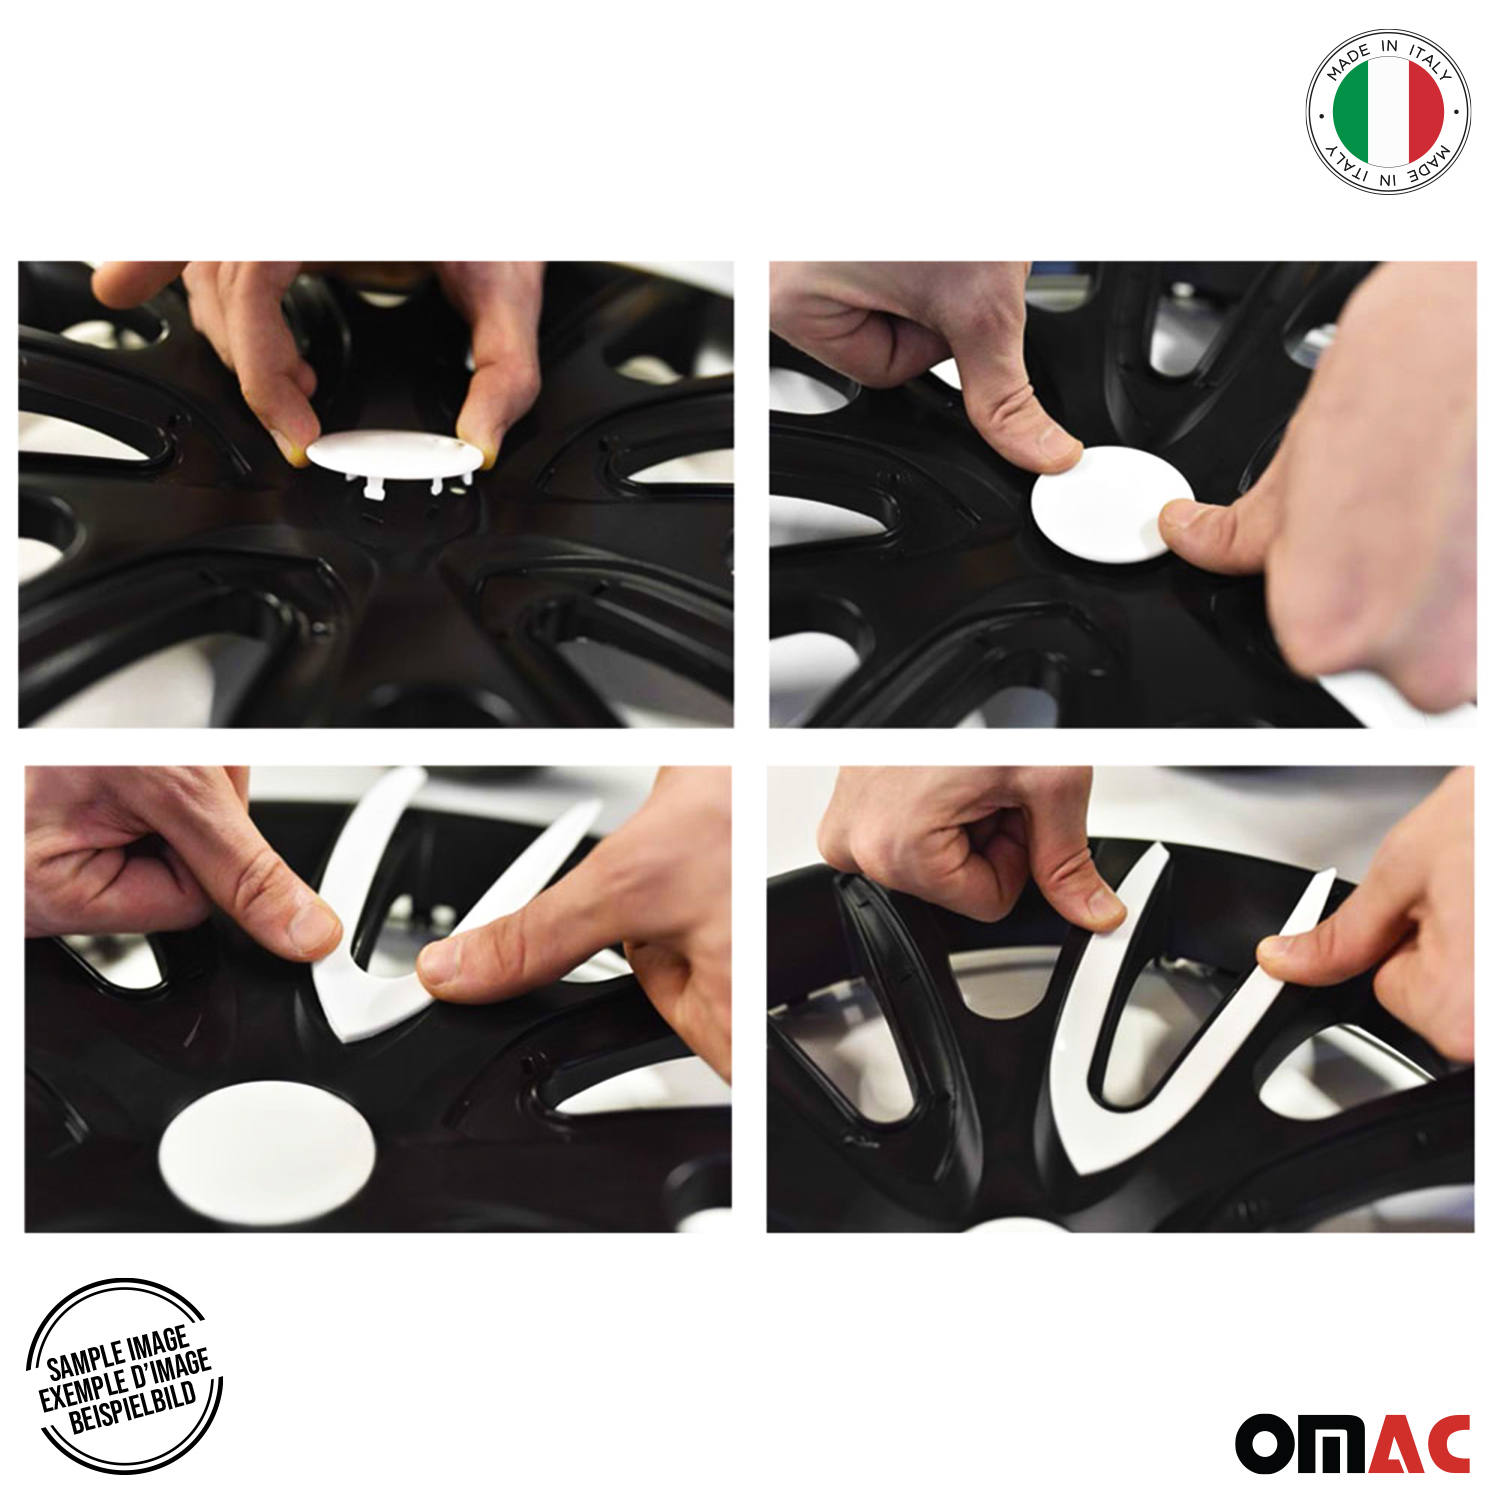 OMAC 16 Inch Wheel Covers Hubcaps for Kia Optima Black Dark Blue Gloss ...